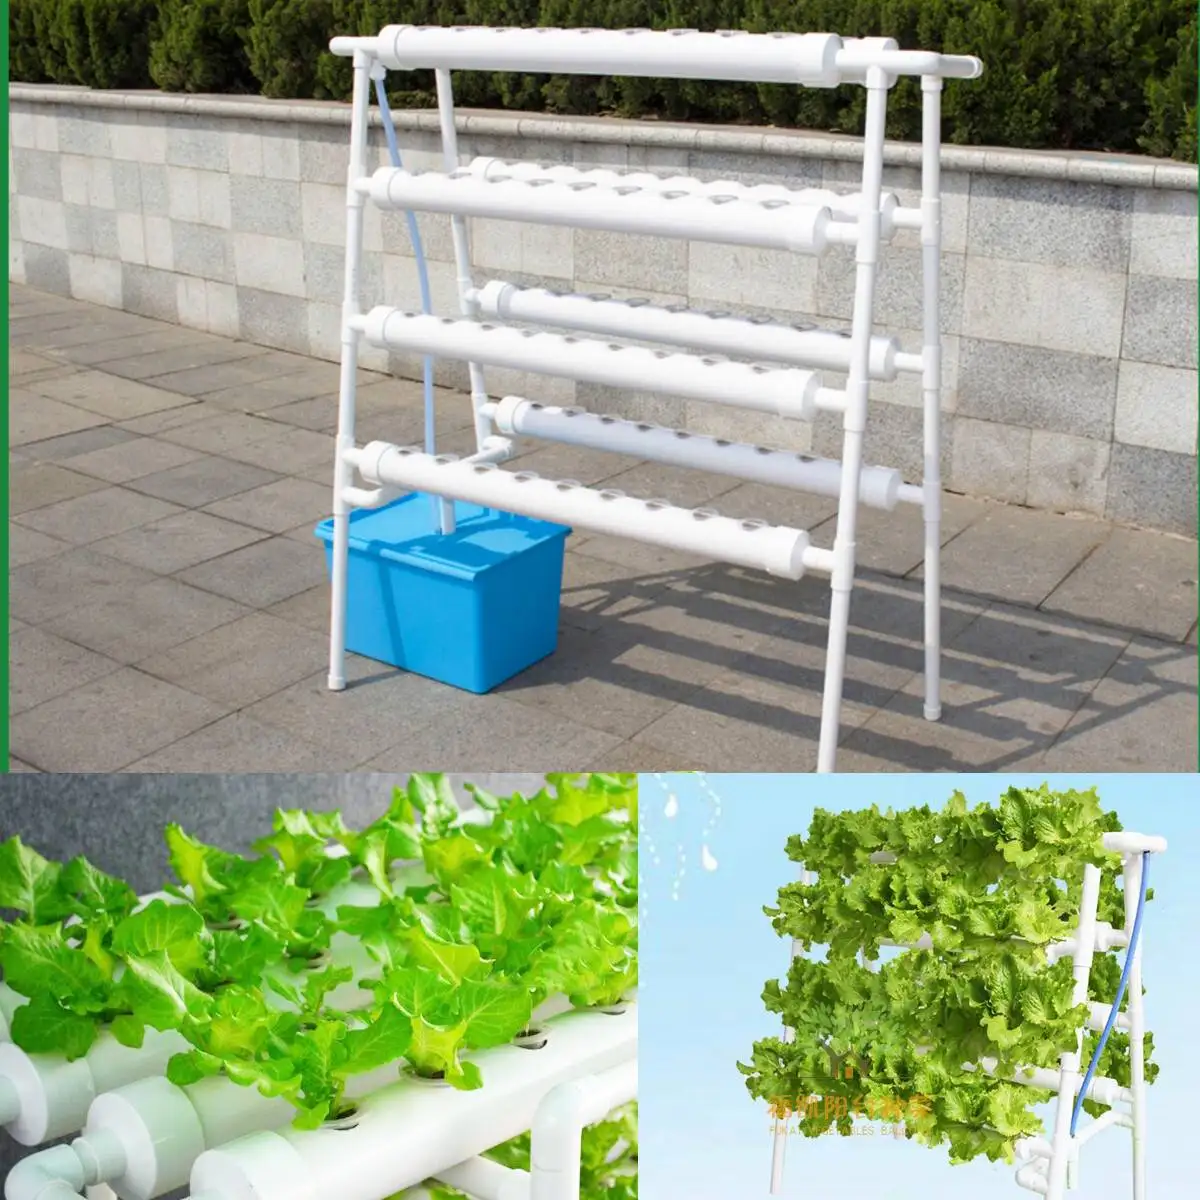 72 Holes Hydroponic System Indoor Garden Plant Grow Kit Nursery Pot Vegetable Water Planting Soilless Seedling Flower Stand 220V